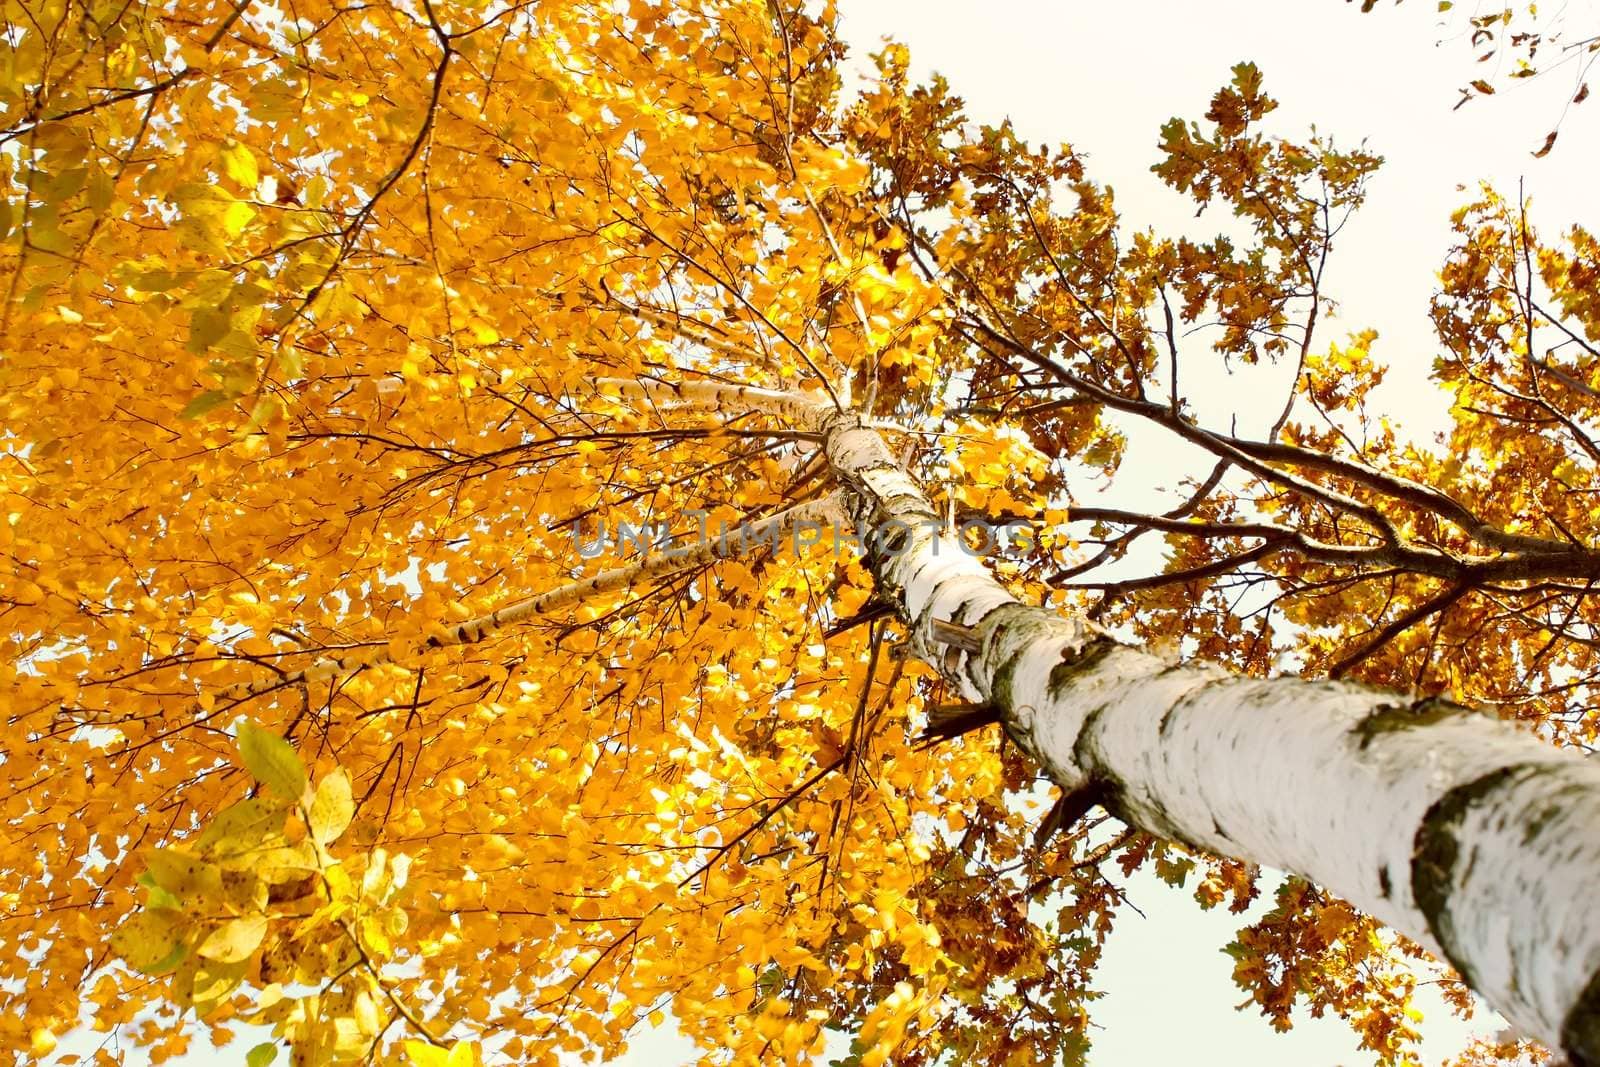 A birch tree in autumn season by qiiip